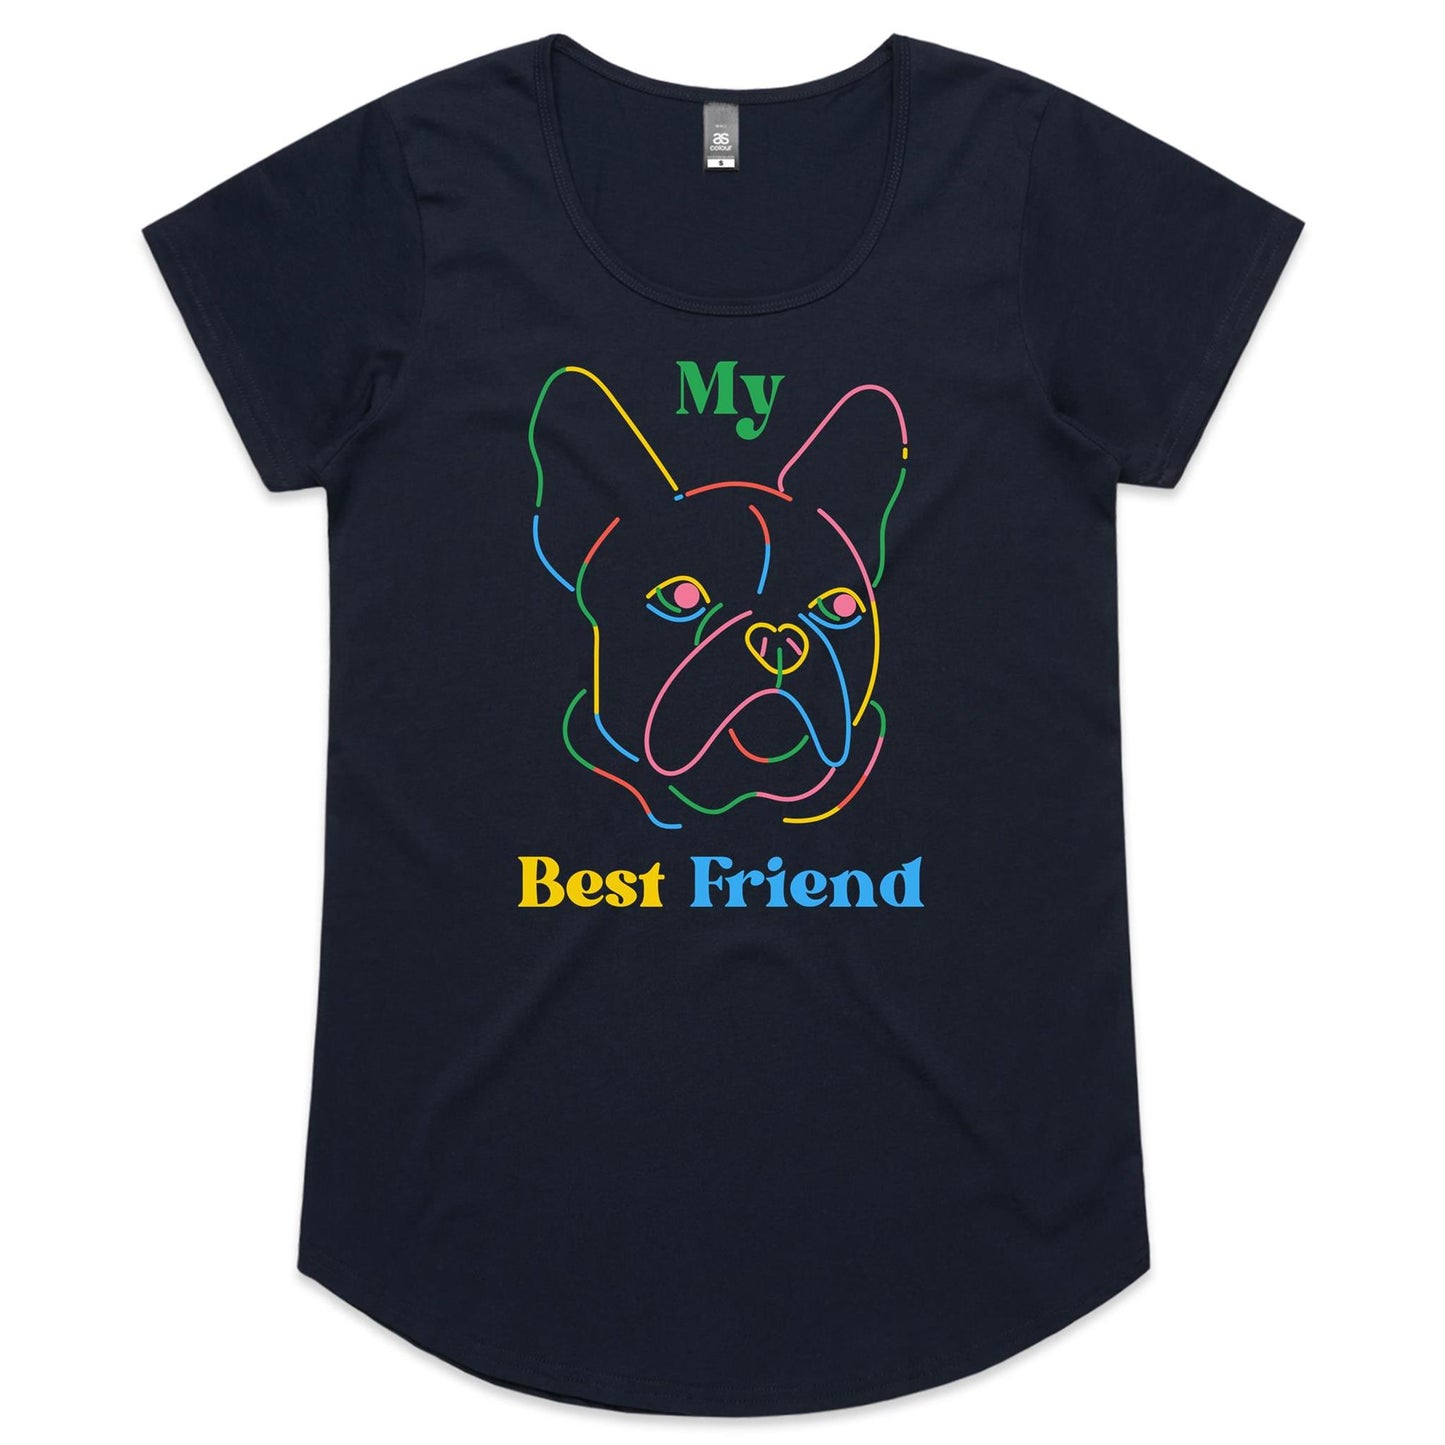 My Best Friend, Dog - Womens Scoop Neck T-Shirt Navy Womens T-shirt animal